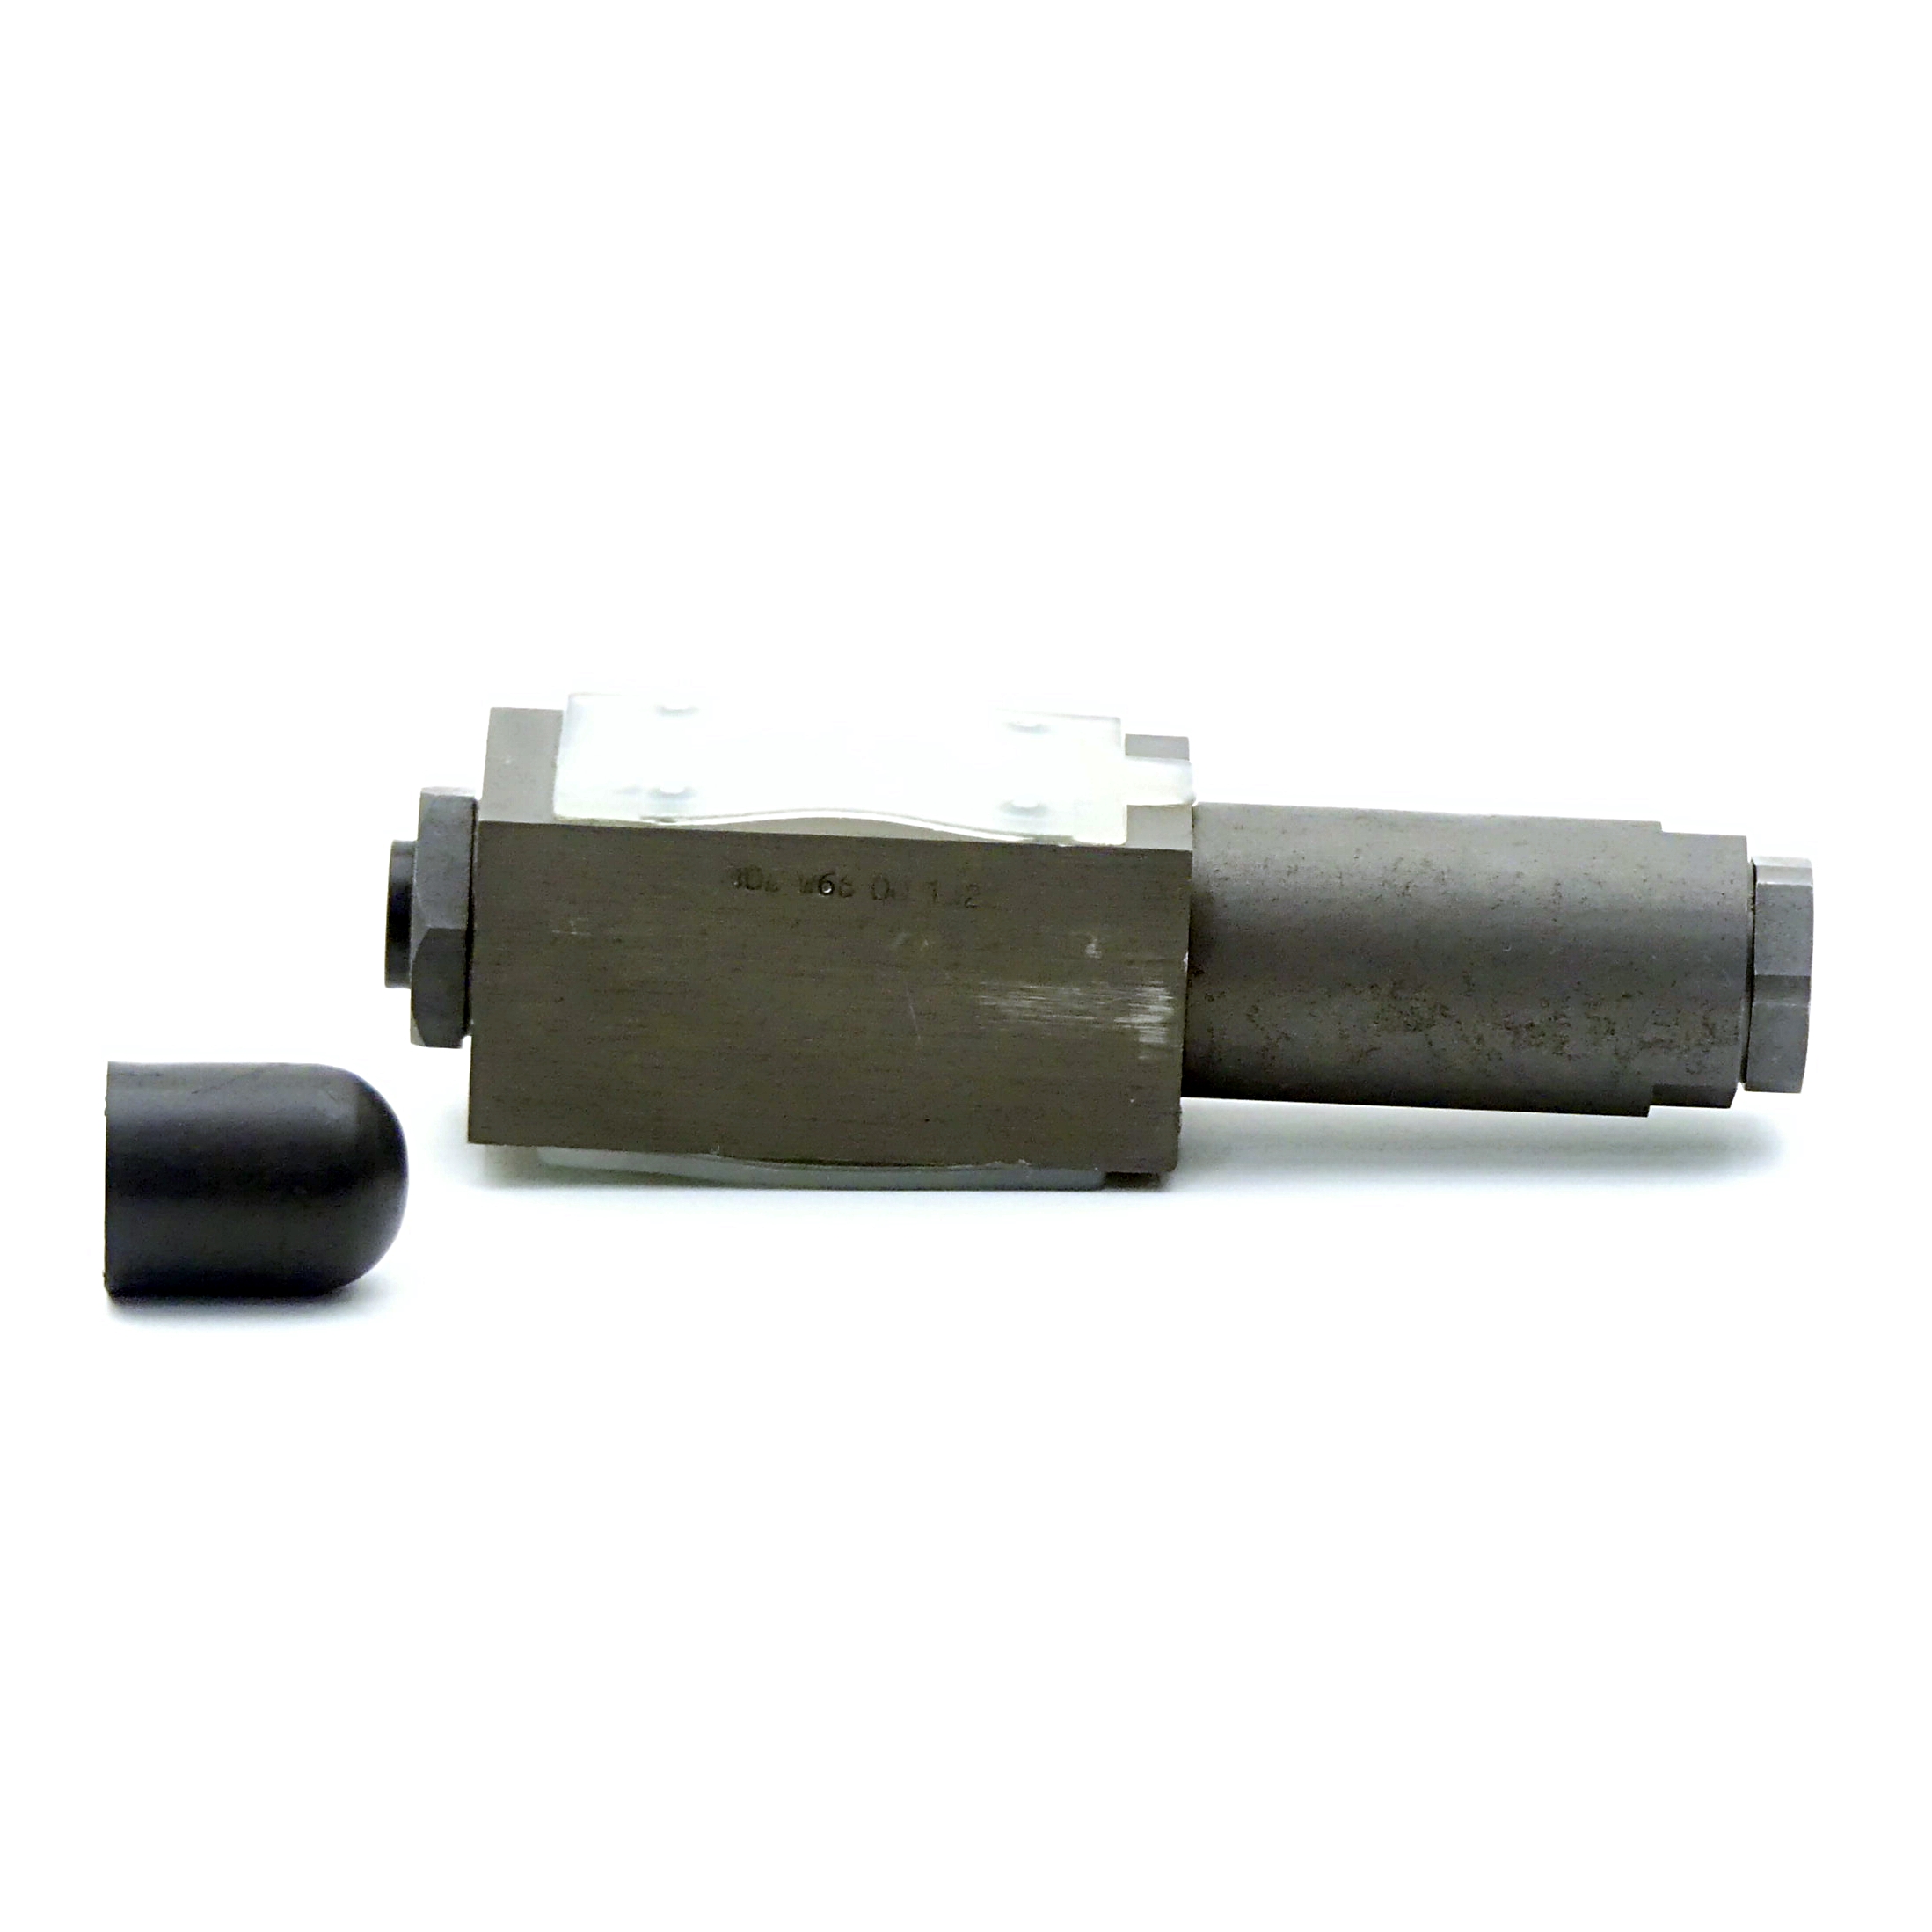 Pressure reduction valve HG-031 / 75 / 23 